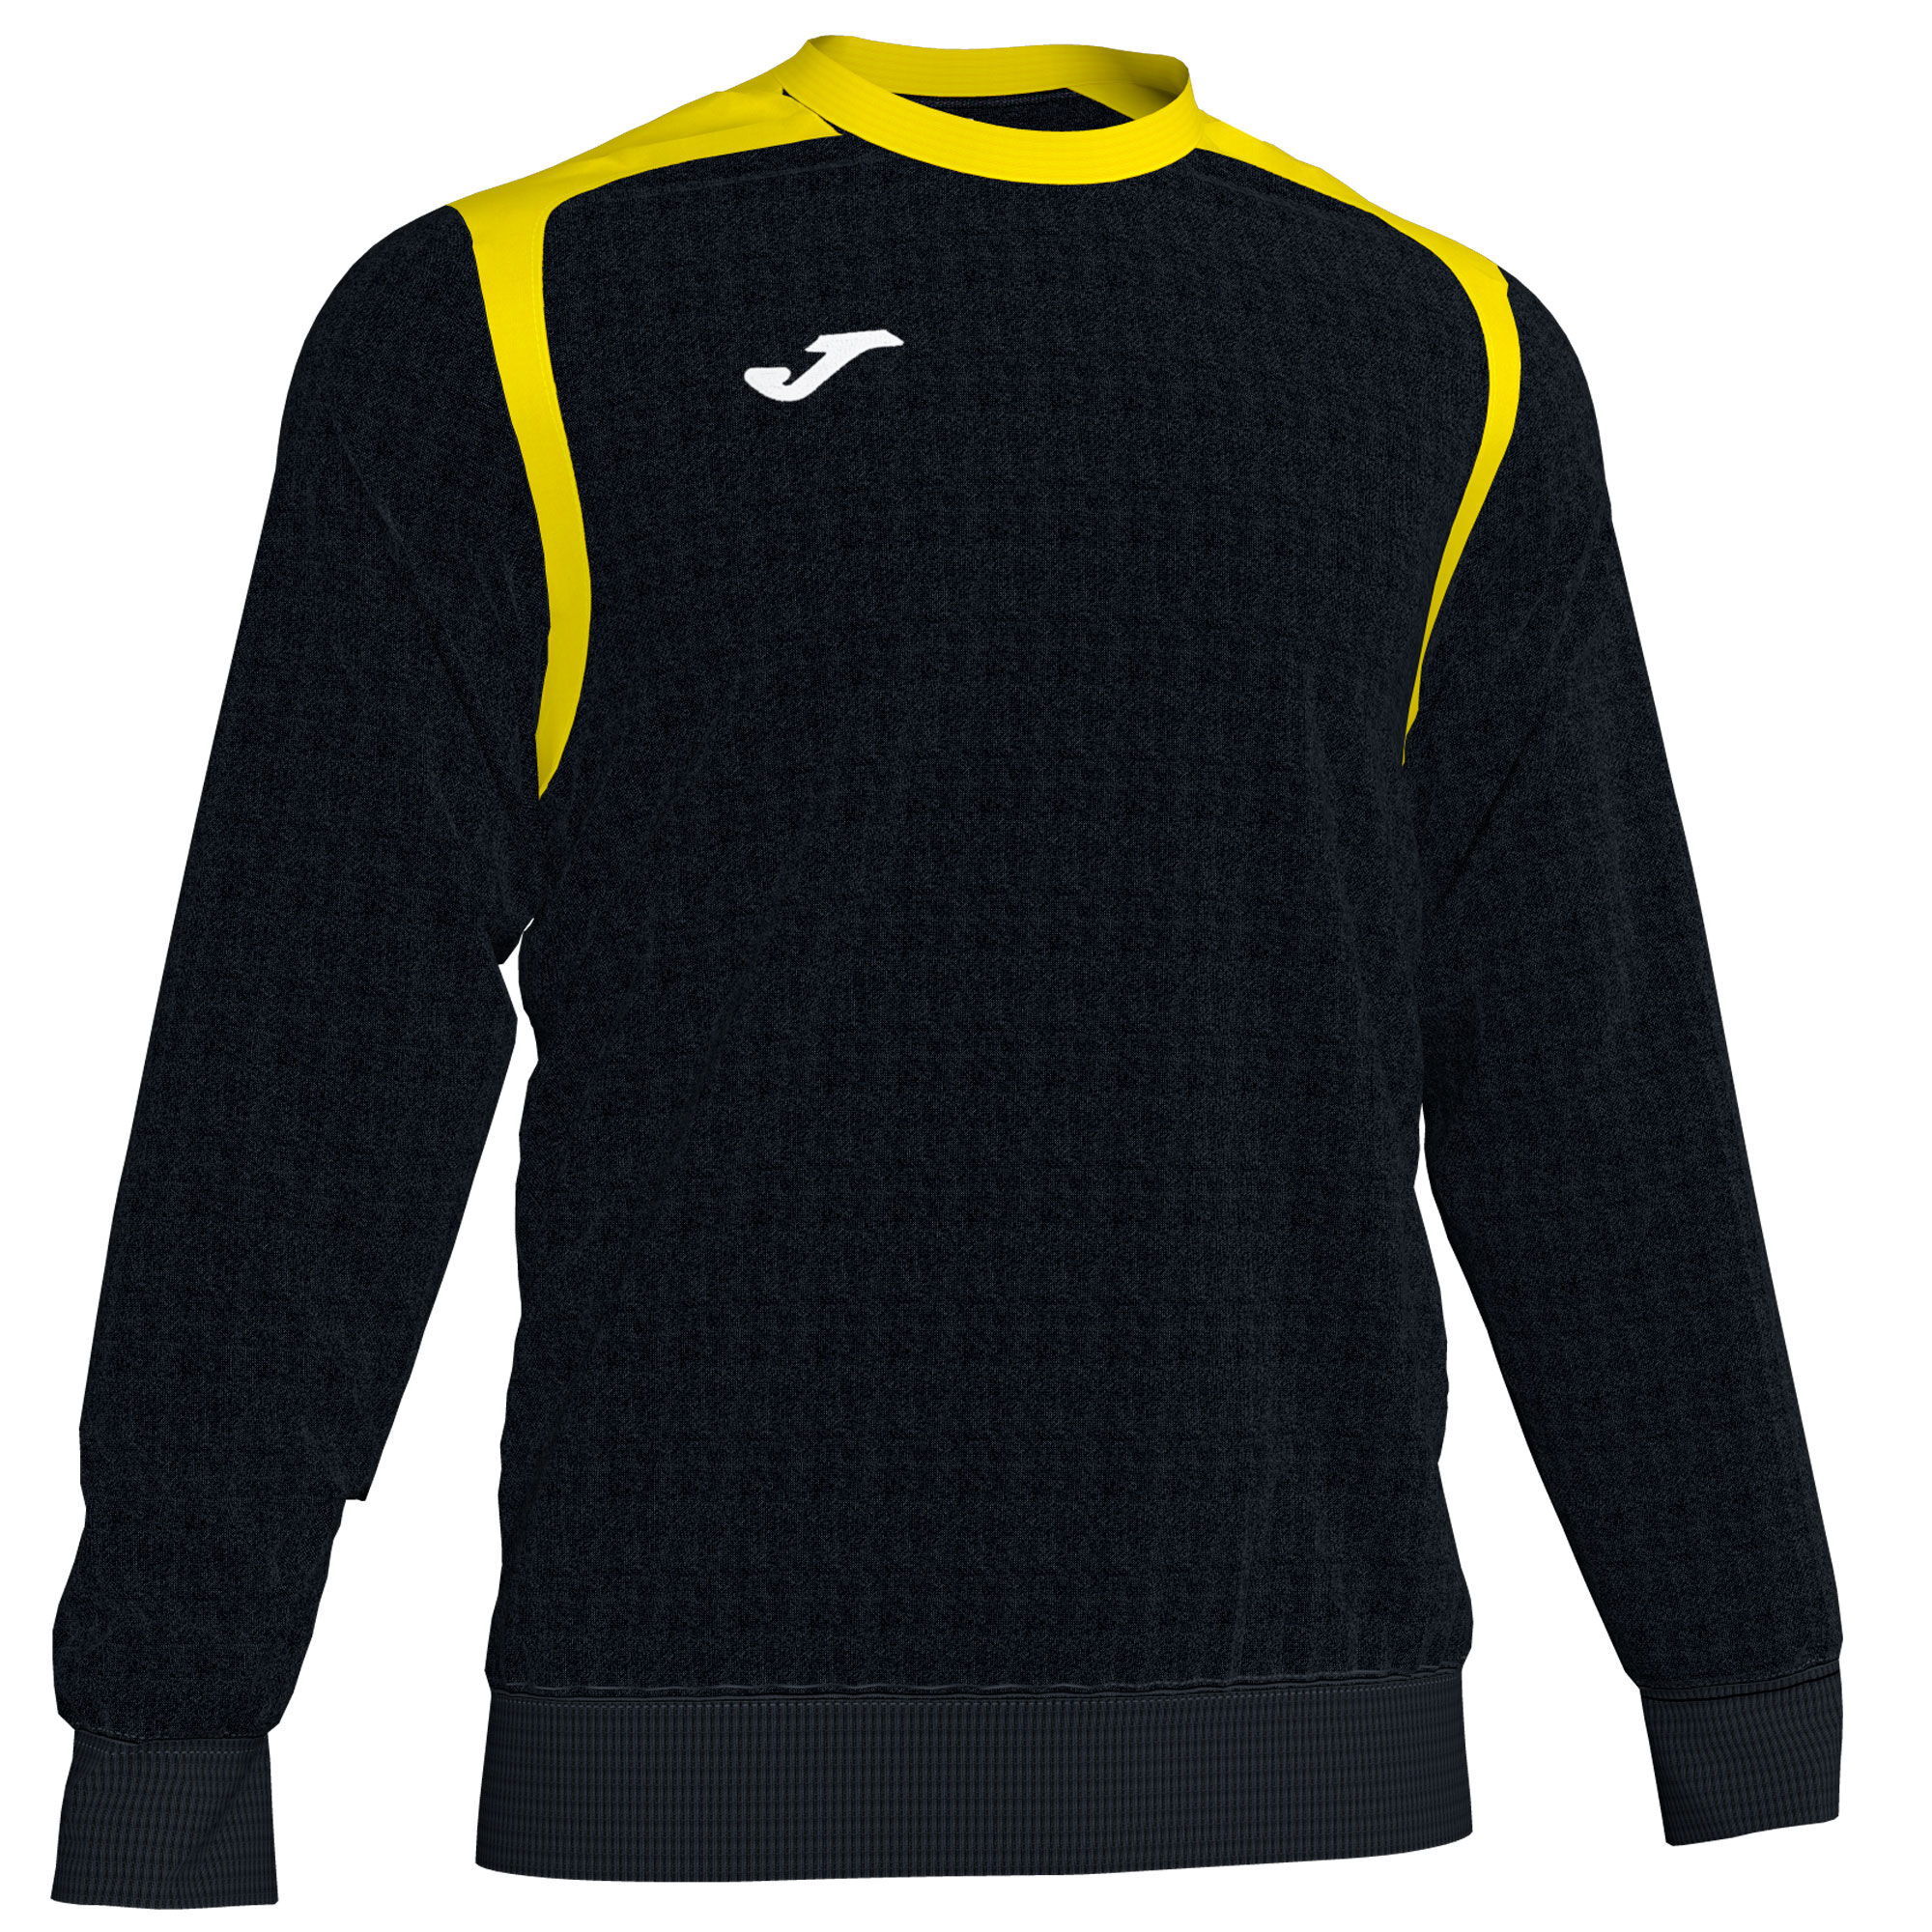 Sweat-shirt homme Championship V noir jaune